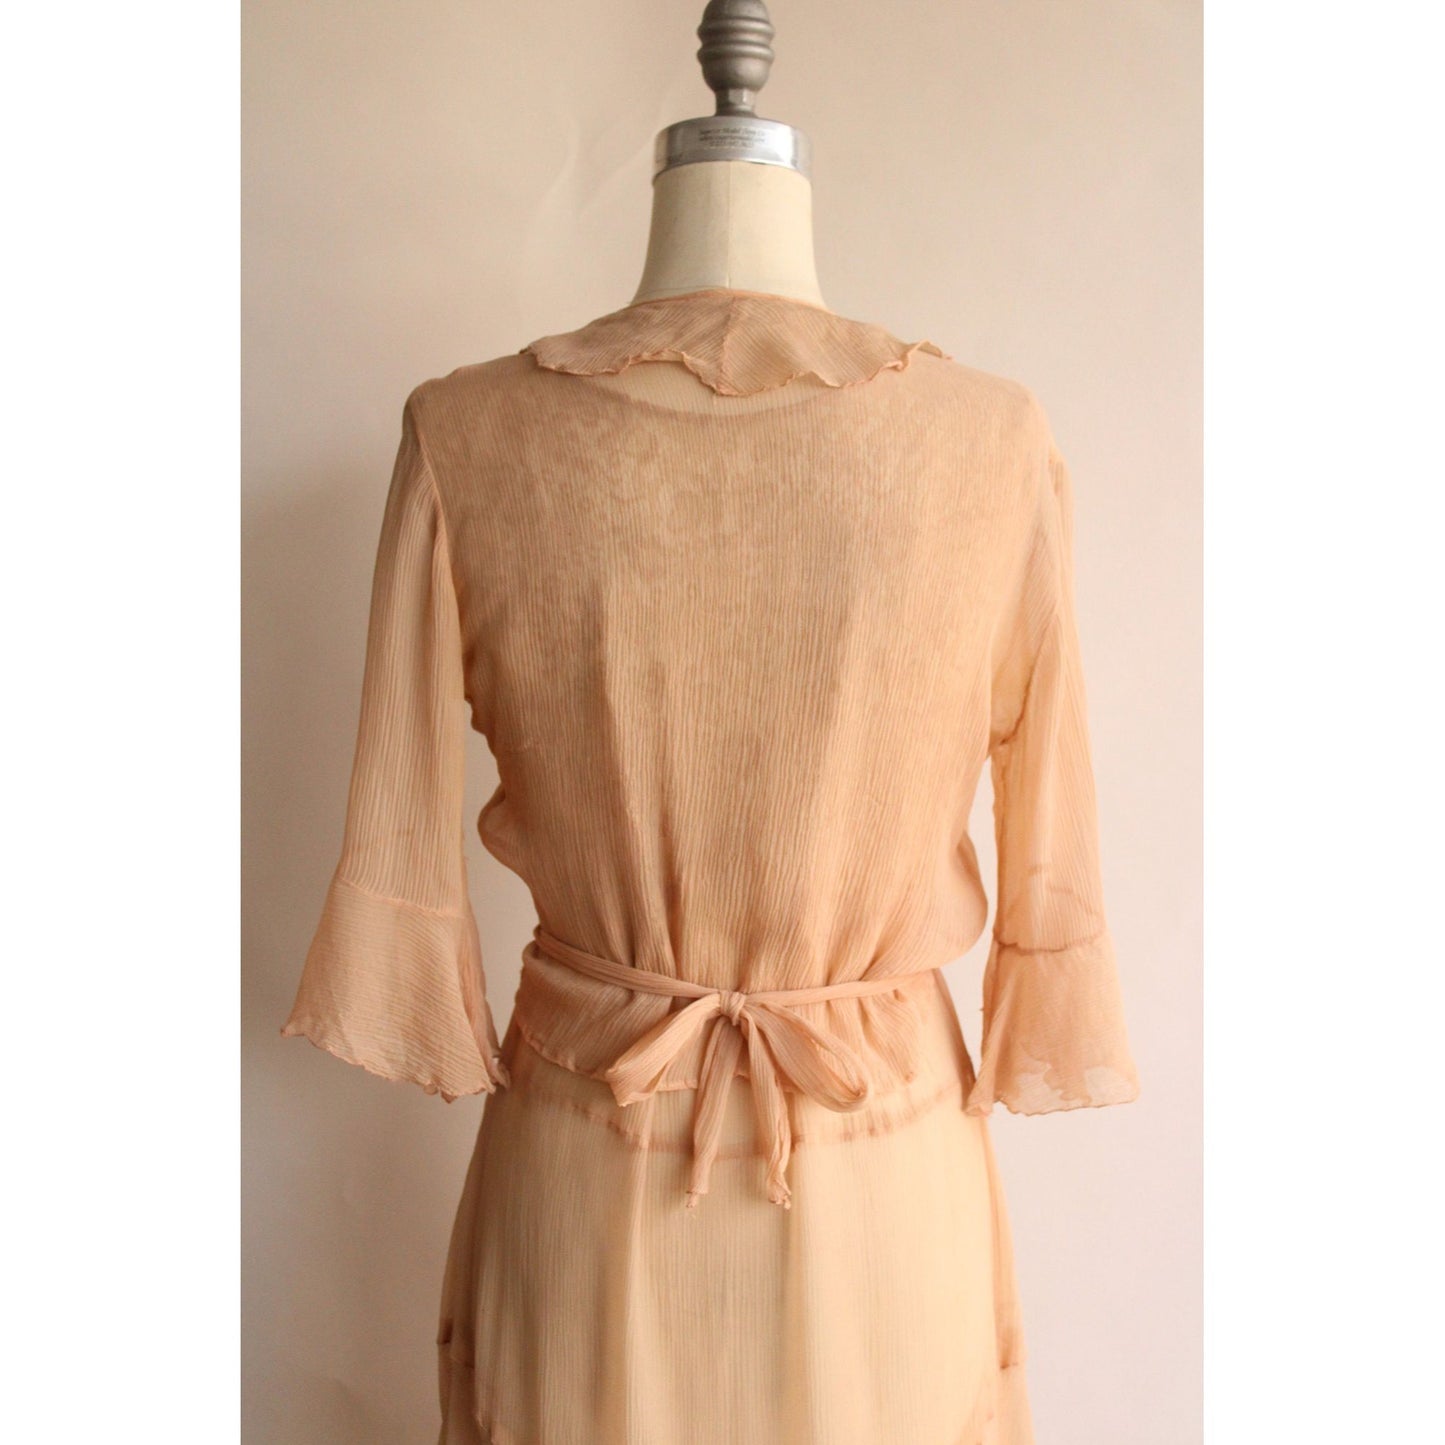 Vintage Antique 1920s Dress with Jacket and Belt